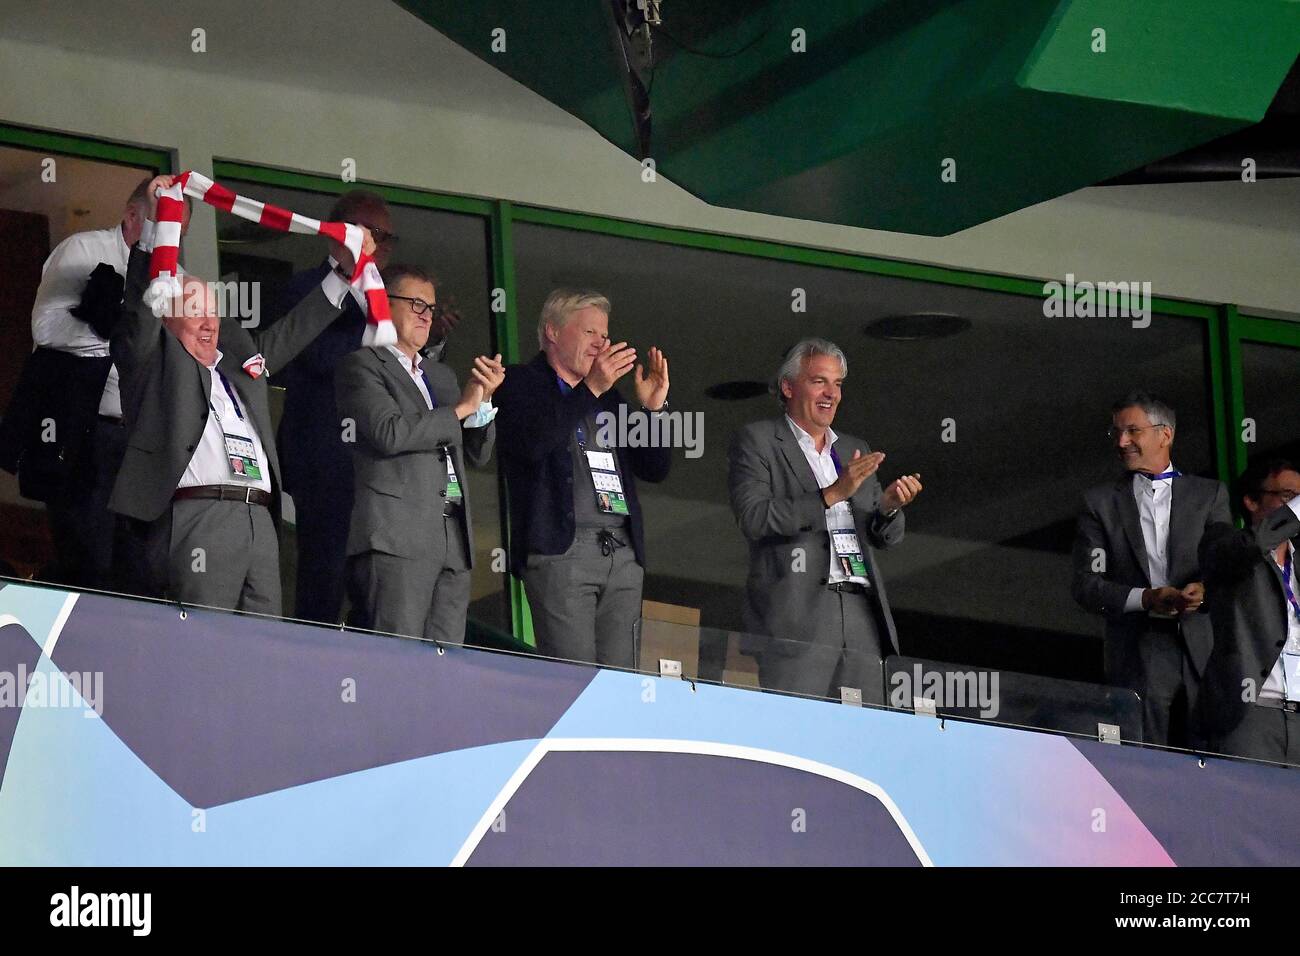 jubilation Management M, left to right Walter MENNEKES (2nd Vice President, M), Jan-Christian DREESEN (Deputy Management Chairman, M), Oliver 'Oli' KAHN (Management member, M), Joerg WACKER (JÃ¶rg) (Management member, M ), Herbert HAINER (President, M) Soccer Champions League, semi-finals, Olympique Lyon - FC Bayern Munich (M), on 08/19/2020 in the Estadio Jose Alvalade in Lisbon/Portugal. PHOTO: Frank Hoermann/SVEN SIMON/Pool Â | usage worldwide Stock Photo